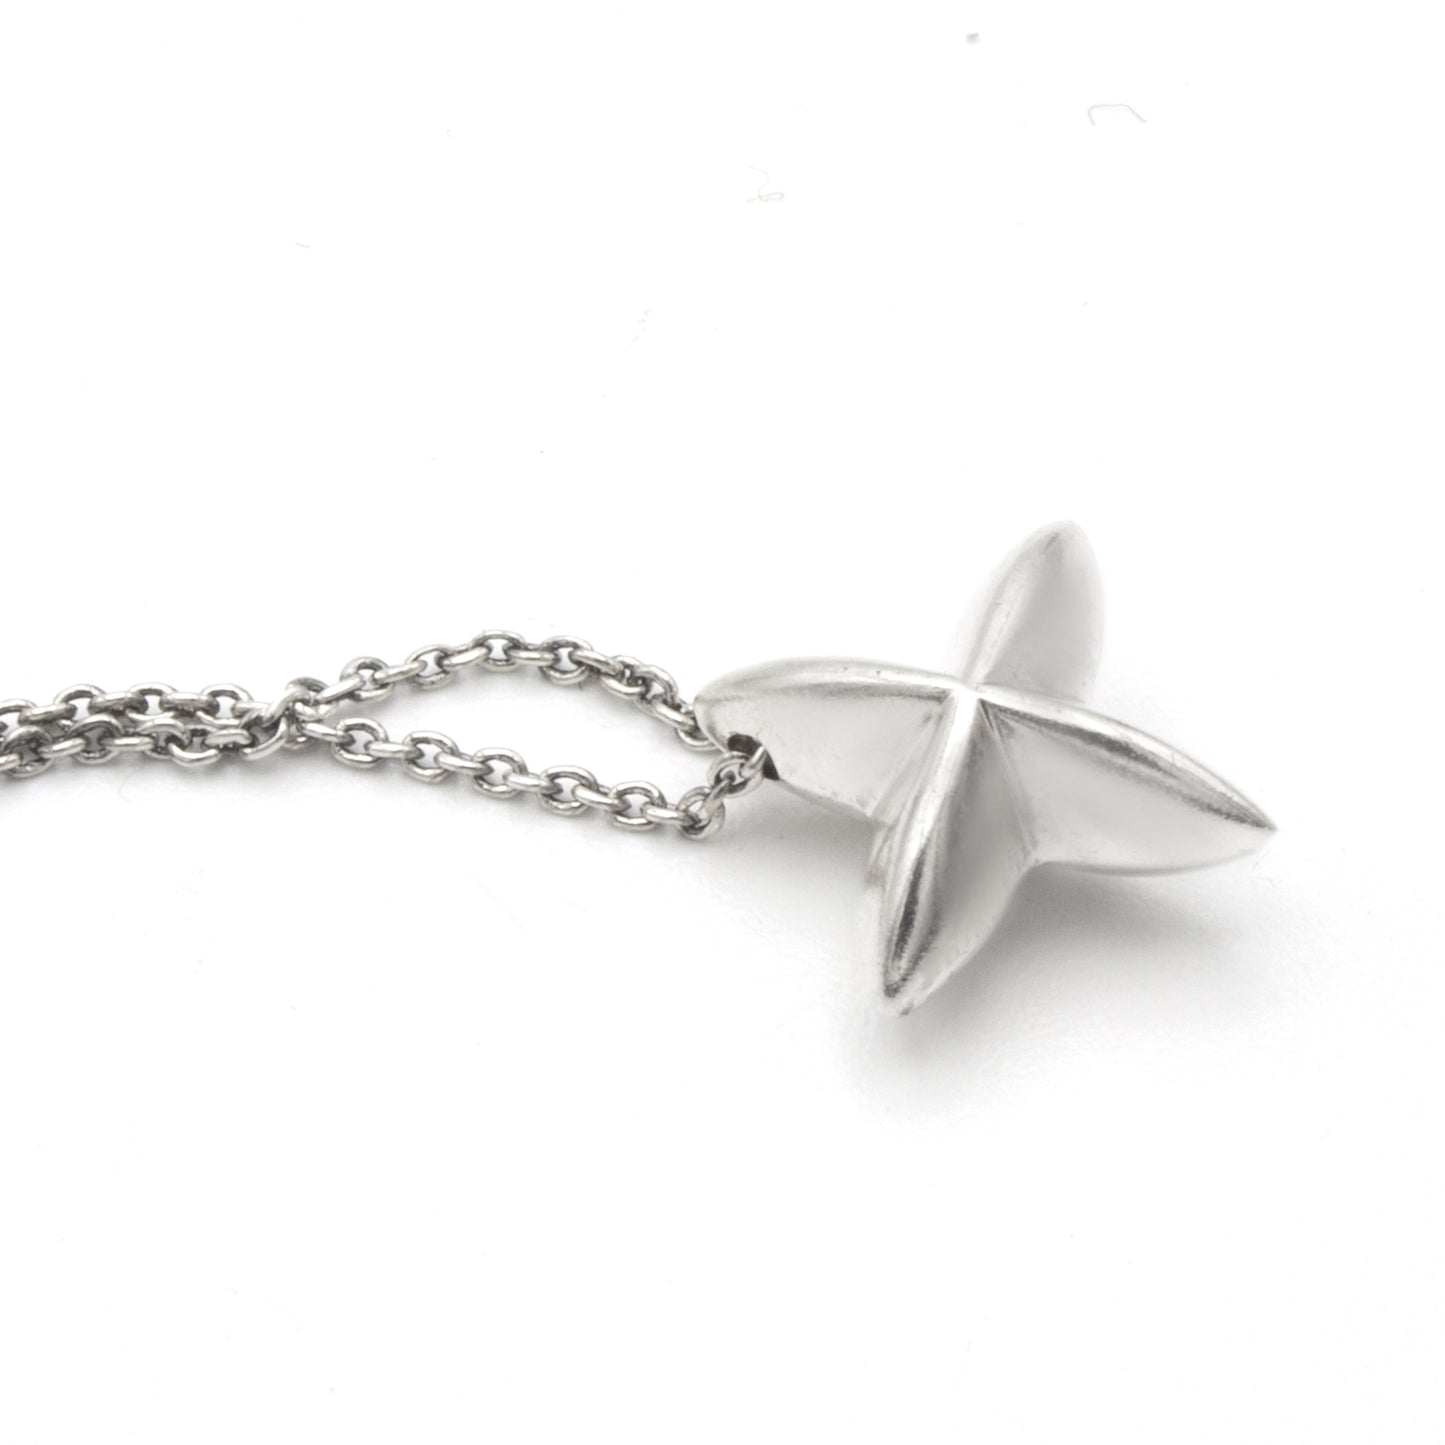 Tiffany & Co Sirius Star necklace